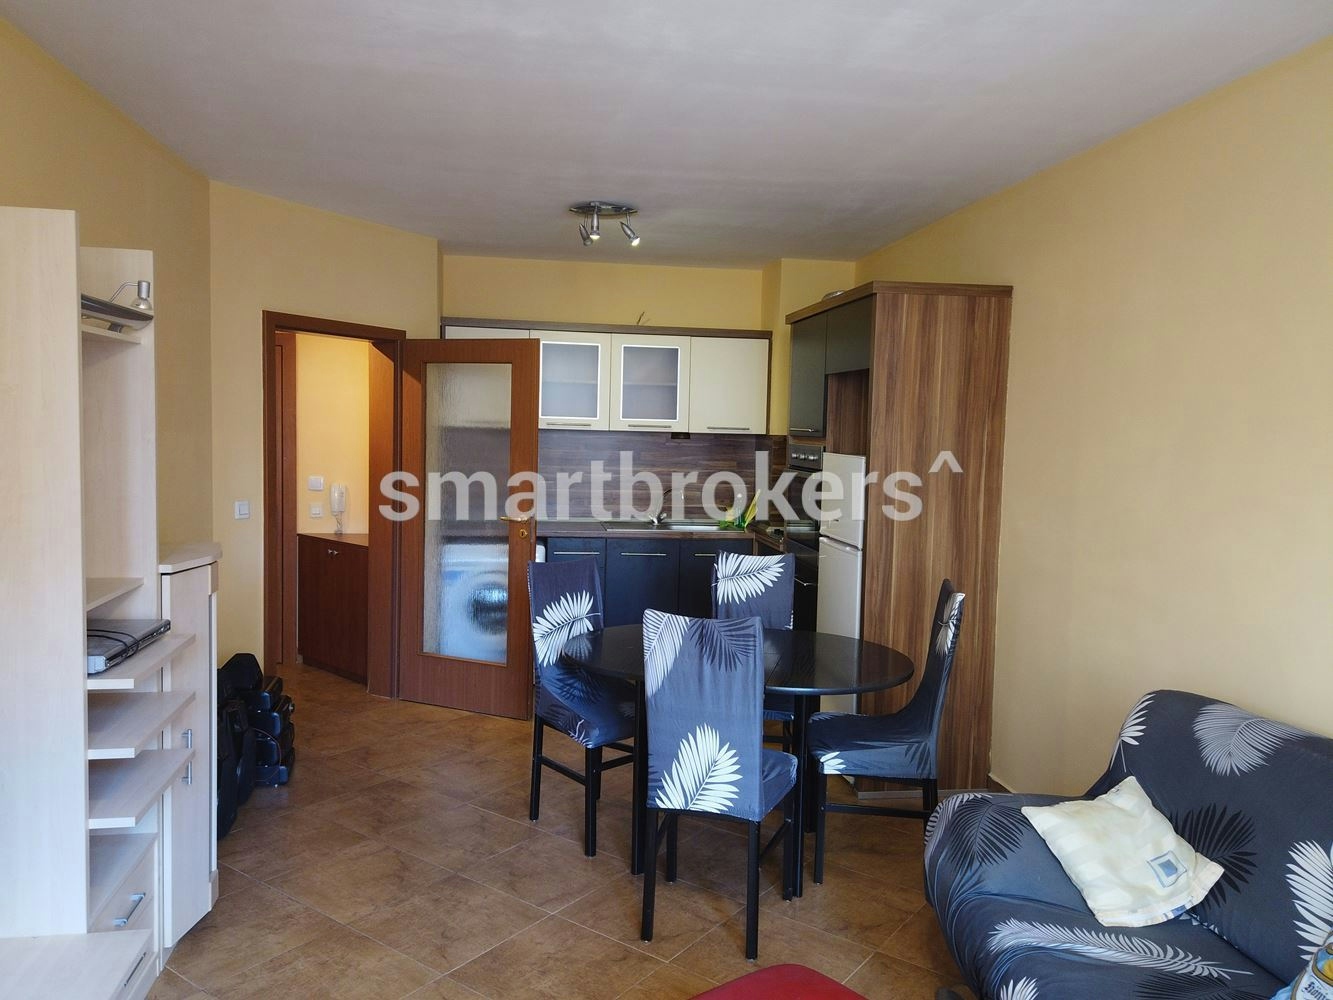 One-bedroom apartment for rent in Monastirski livadi district